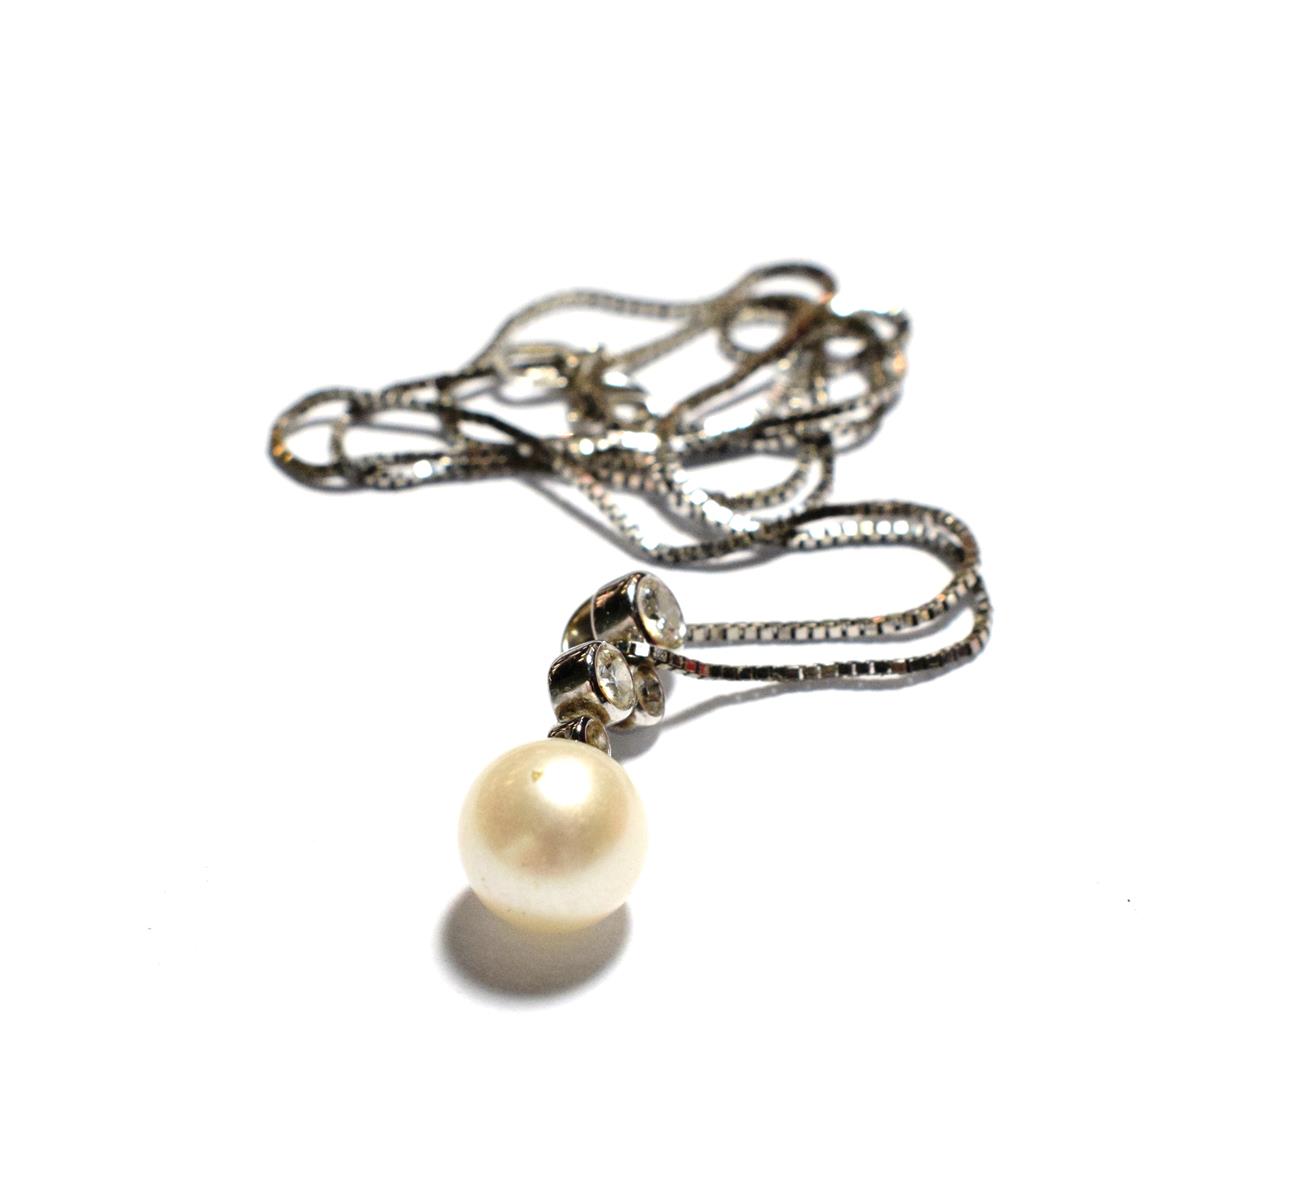 Lot 181 - A cultured pearl and diamond set pendant on chain, pendant length 2.2cm, chain length 40cm